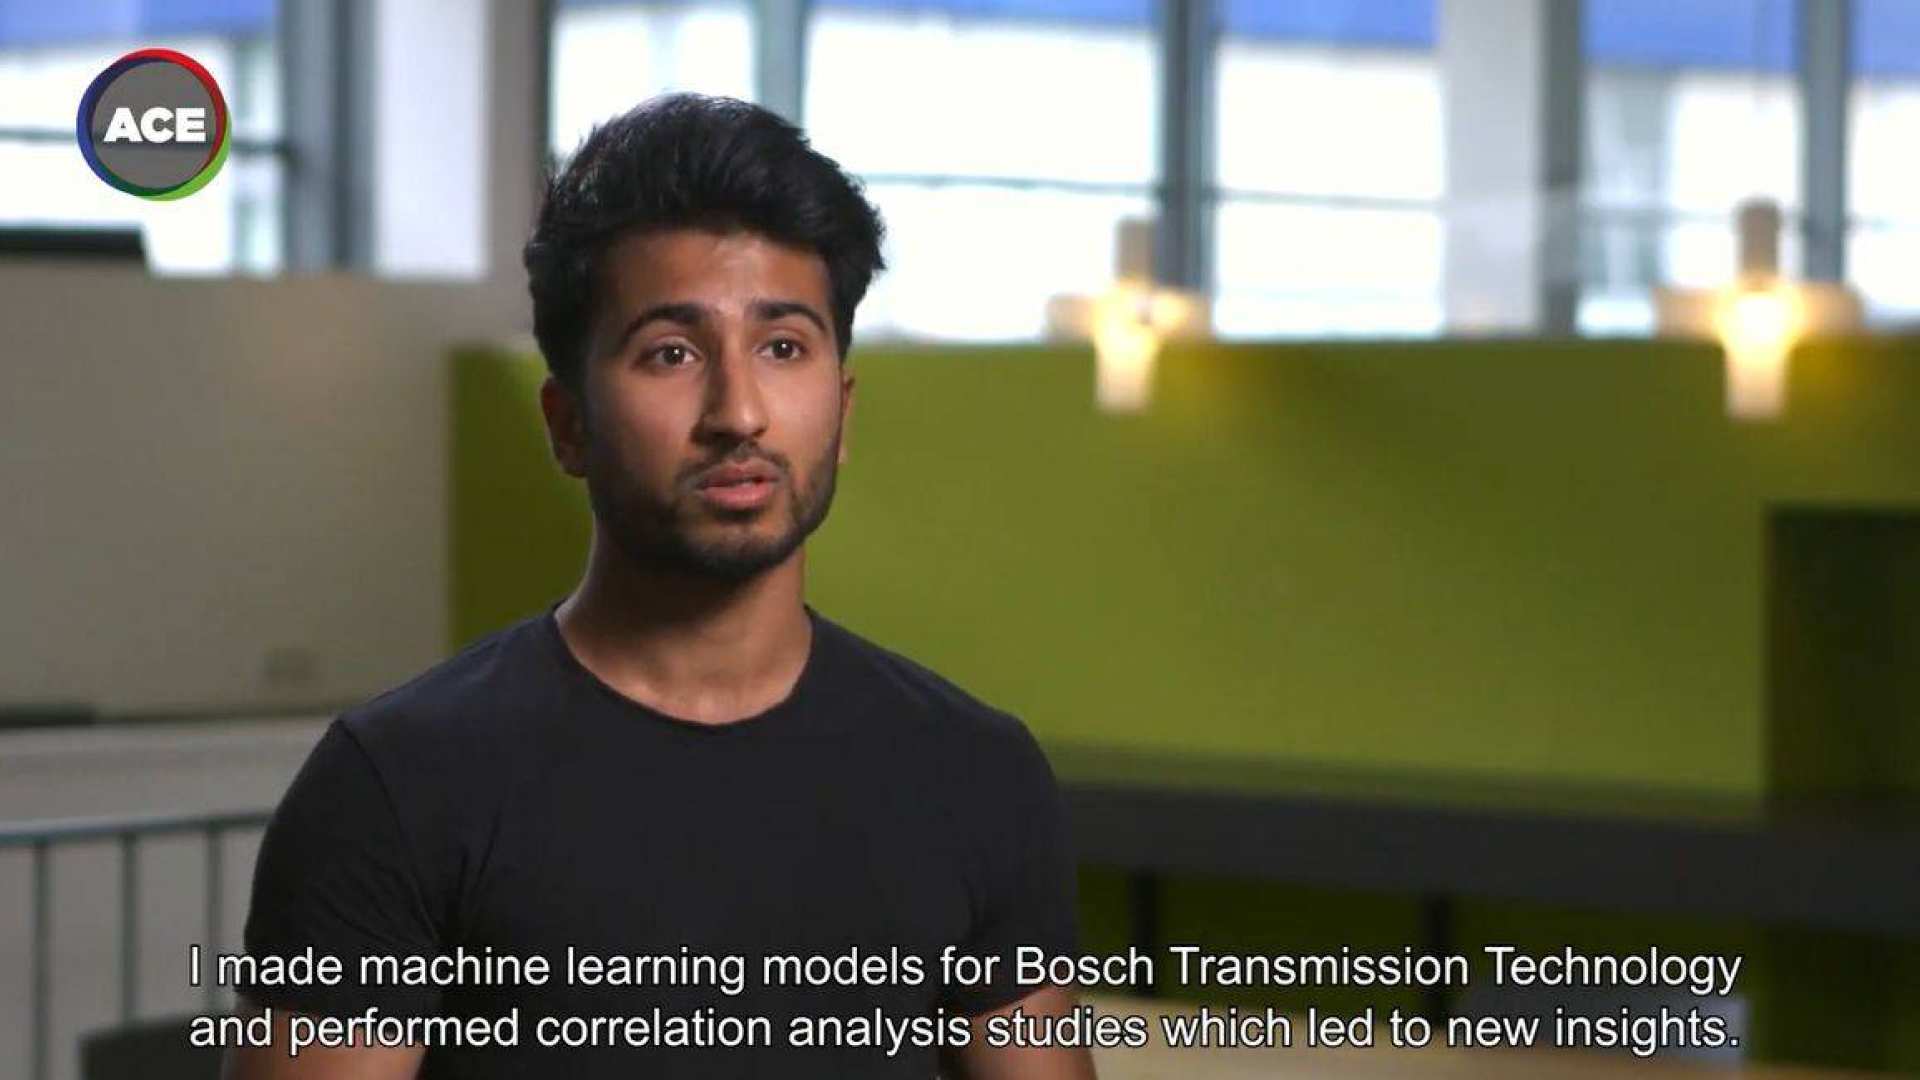 307456 Umang Tusli vertelt over graduation bij Bosch Transmission Technology